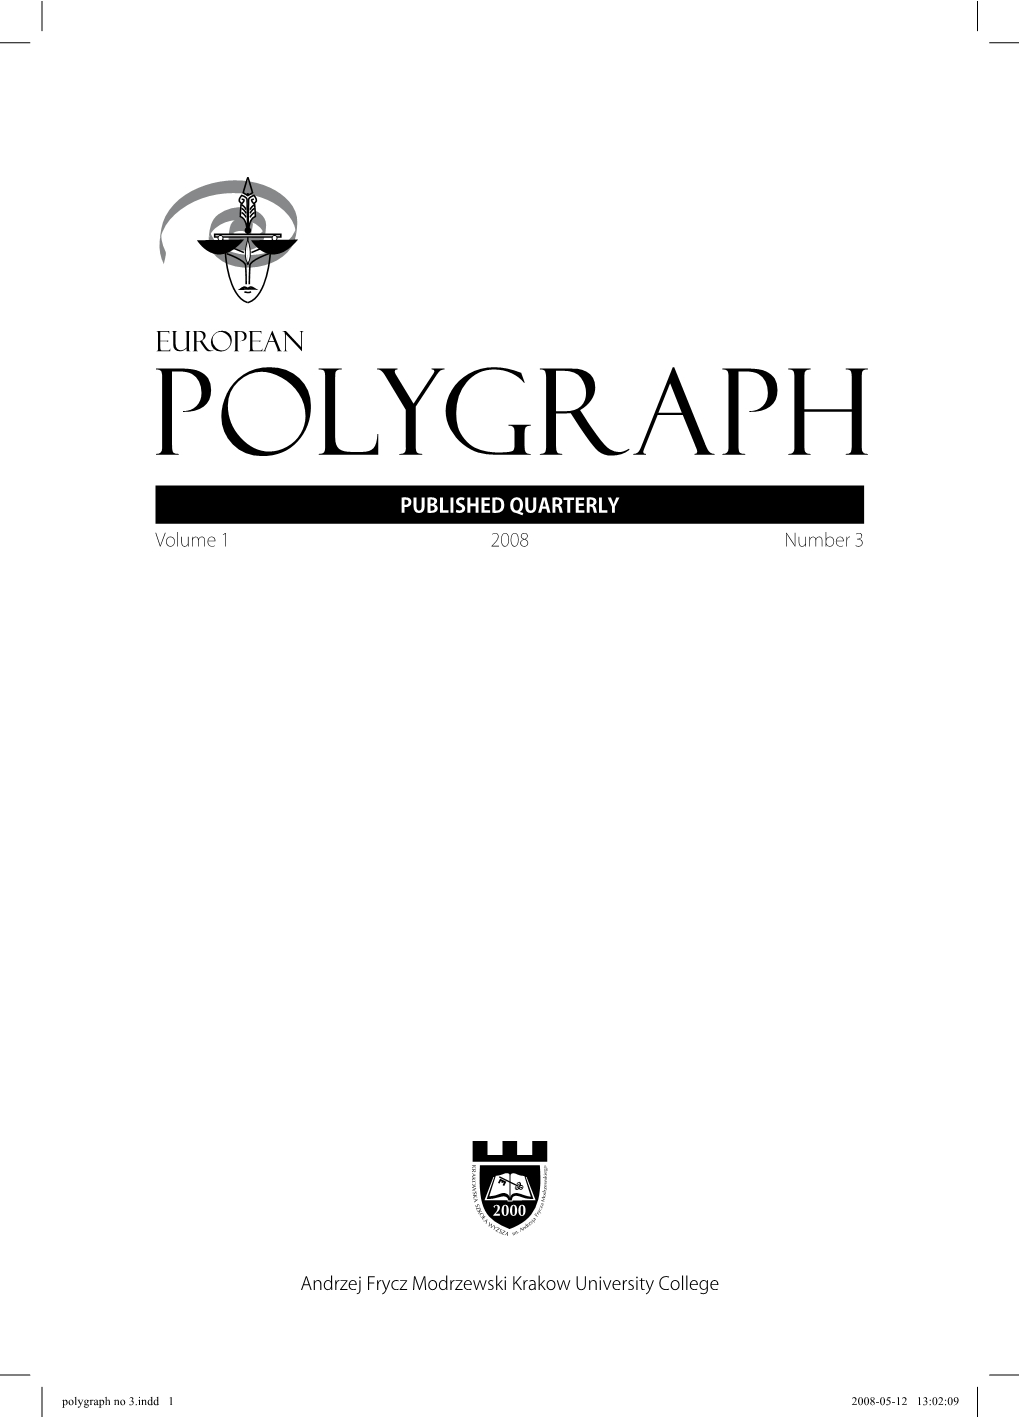 Alibi Testing Potential in Polygraphic Examination